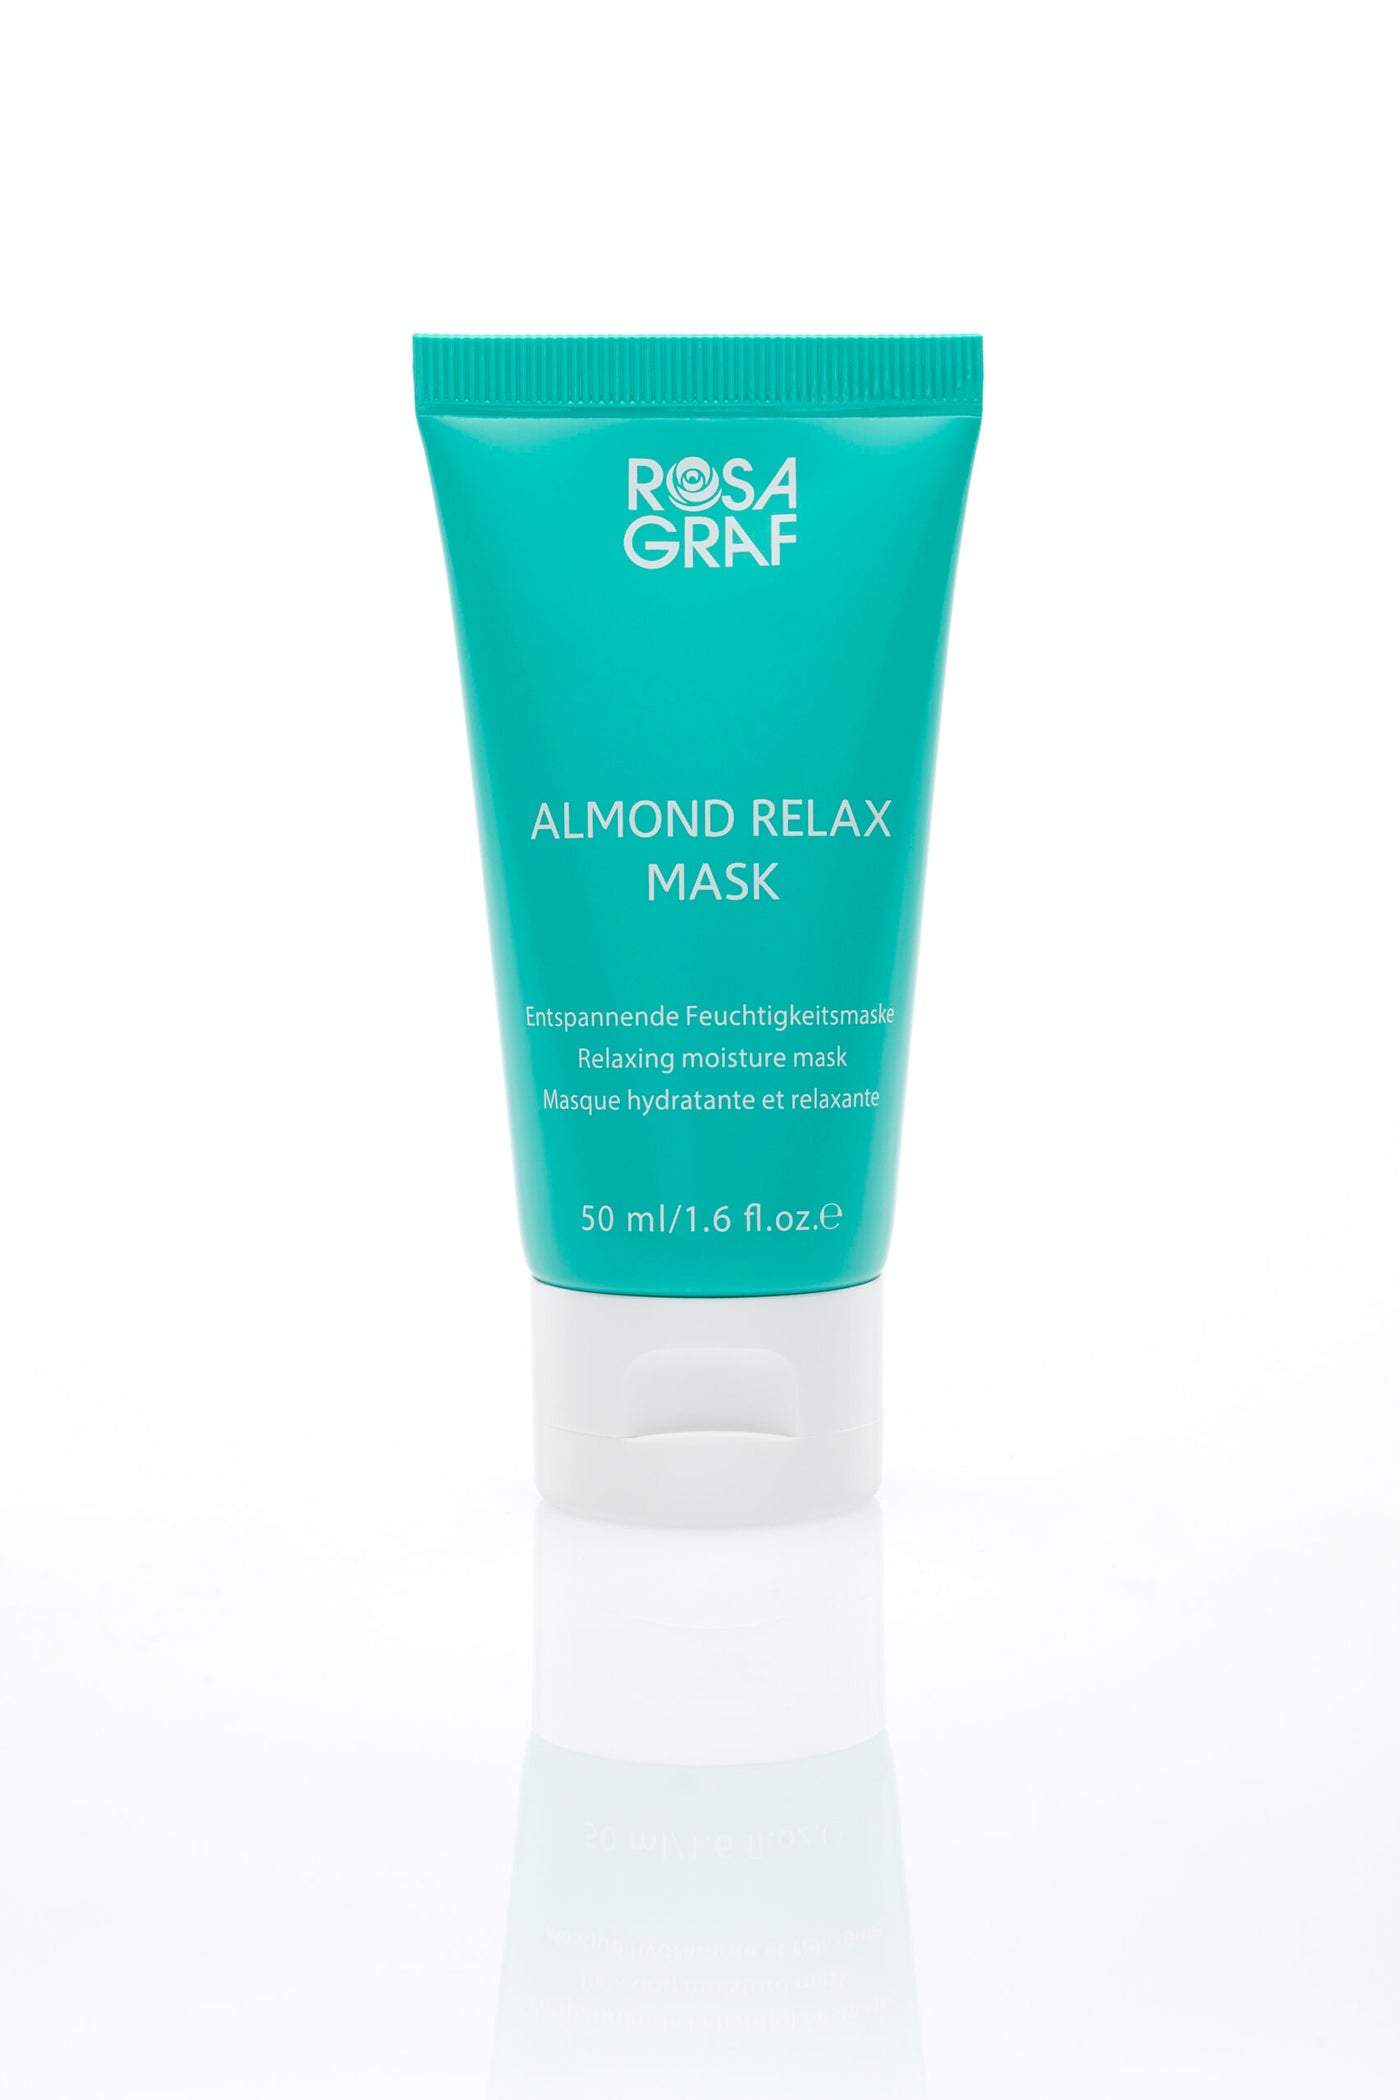 Rosa Graf - Almond relax mask 50ml